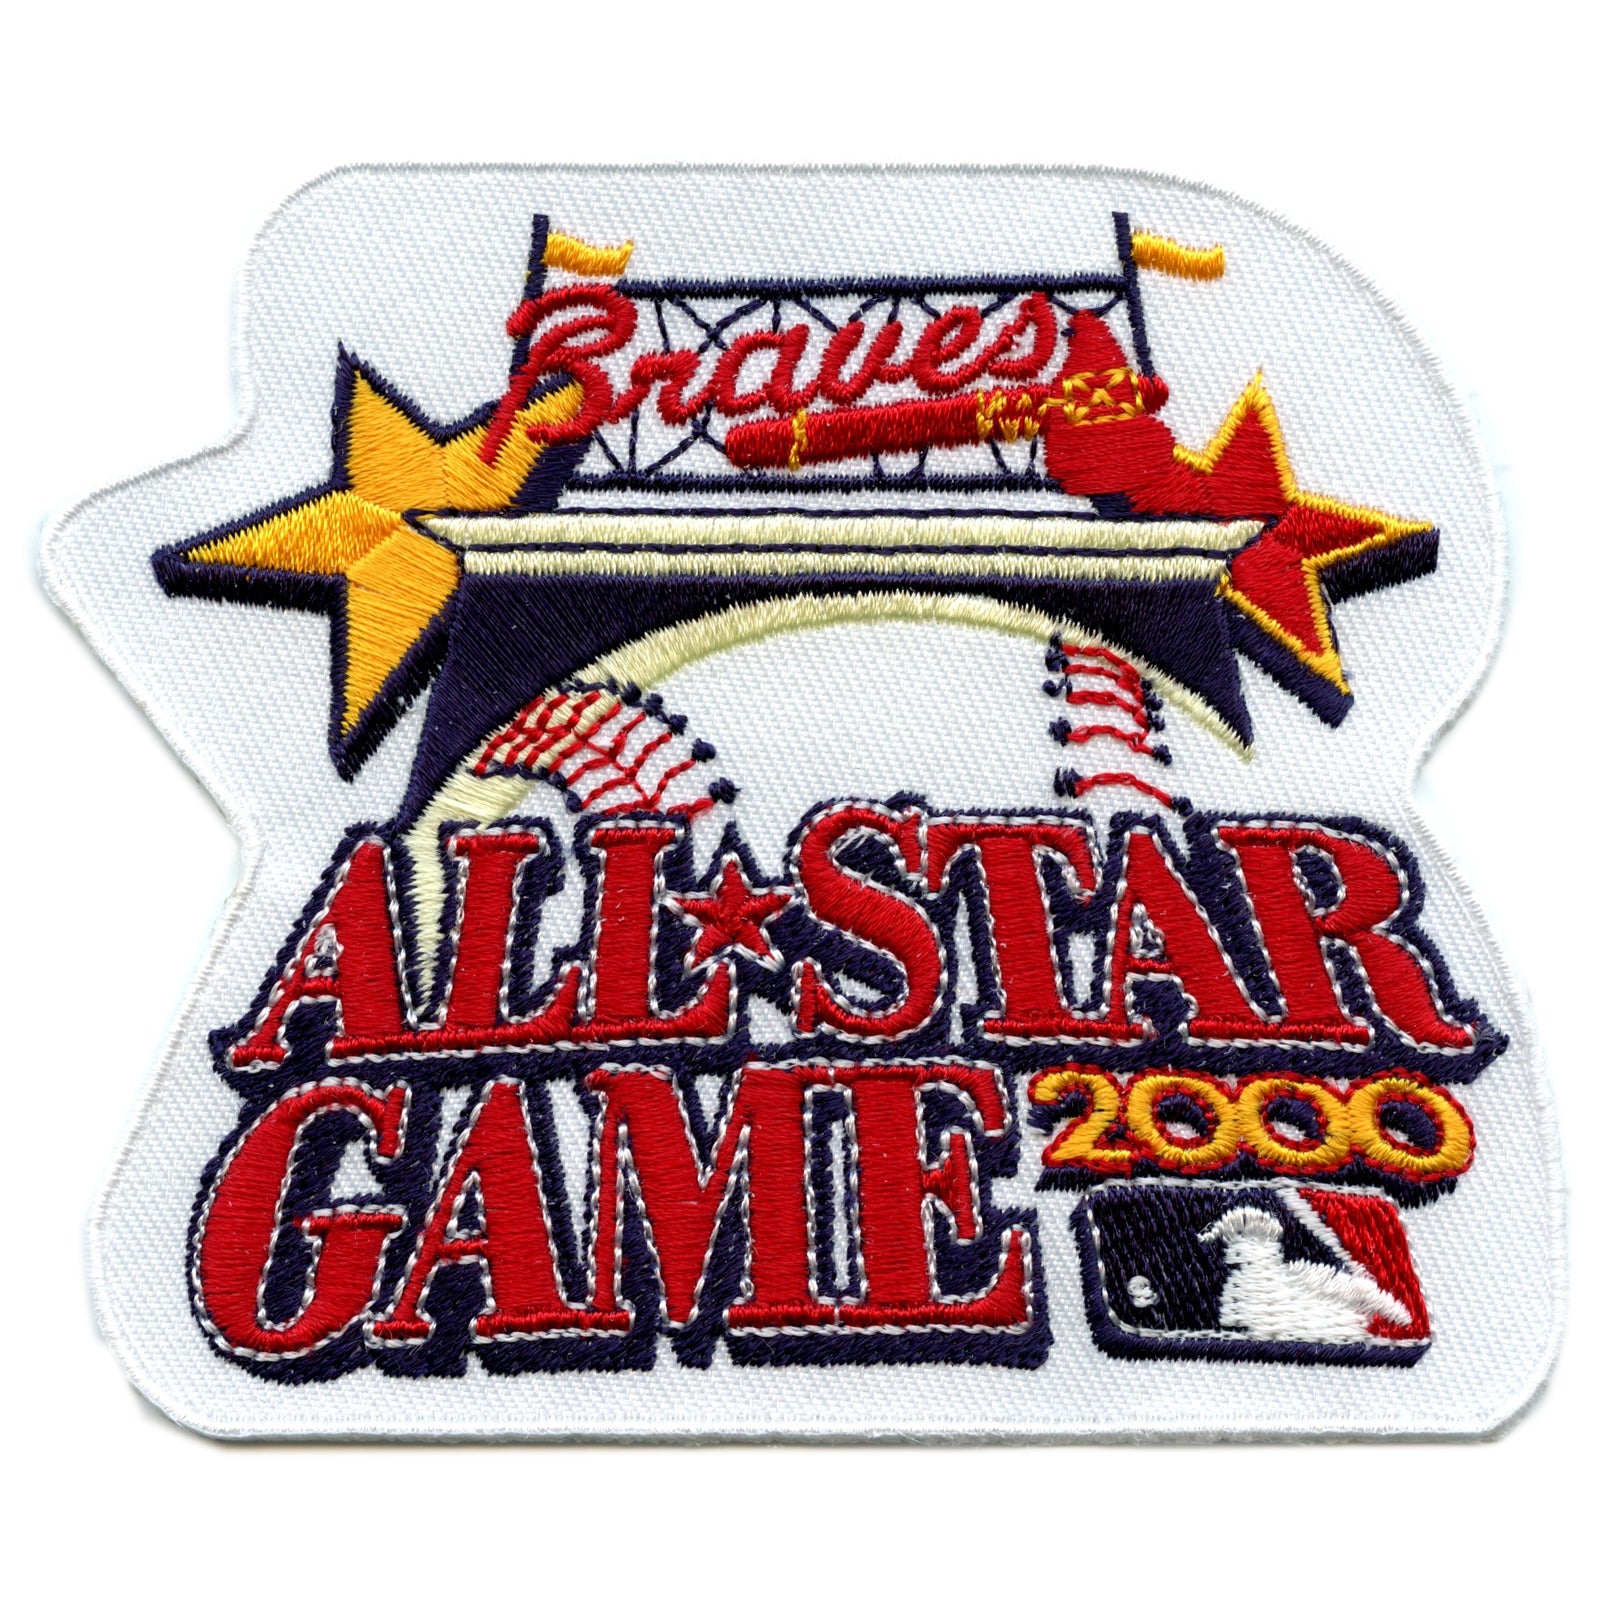 Atlanta Braves cover All-Star Game logo on jerseys, hats - ESPN